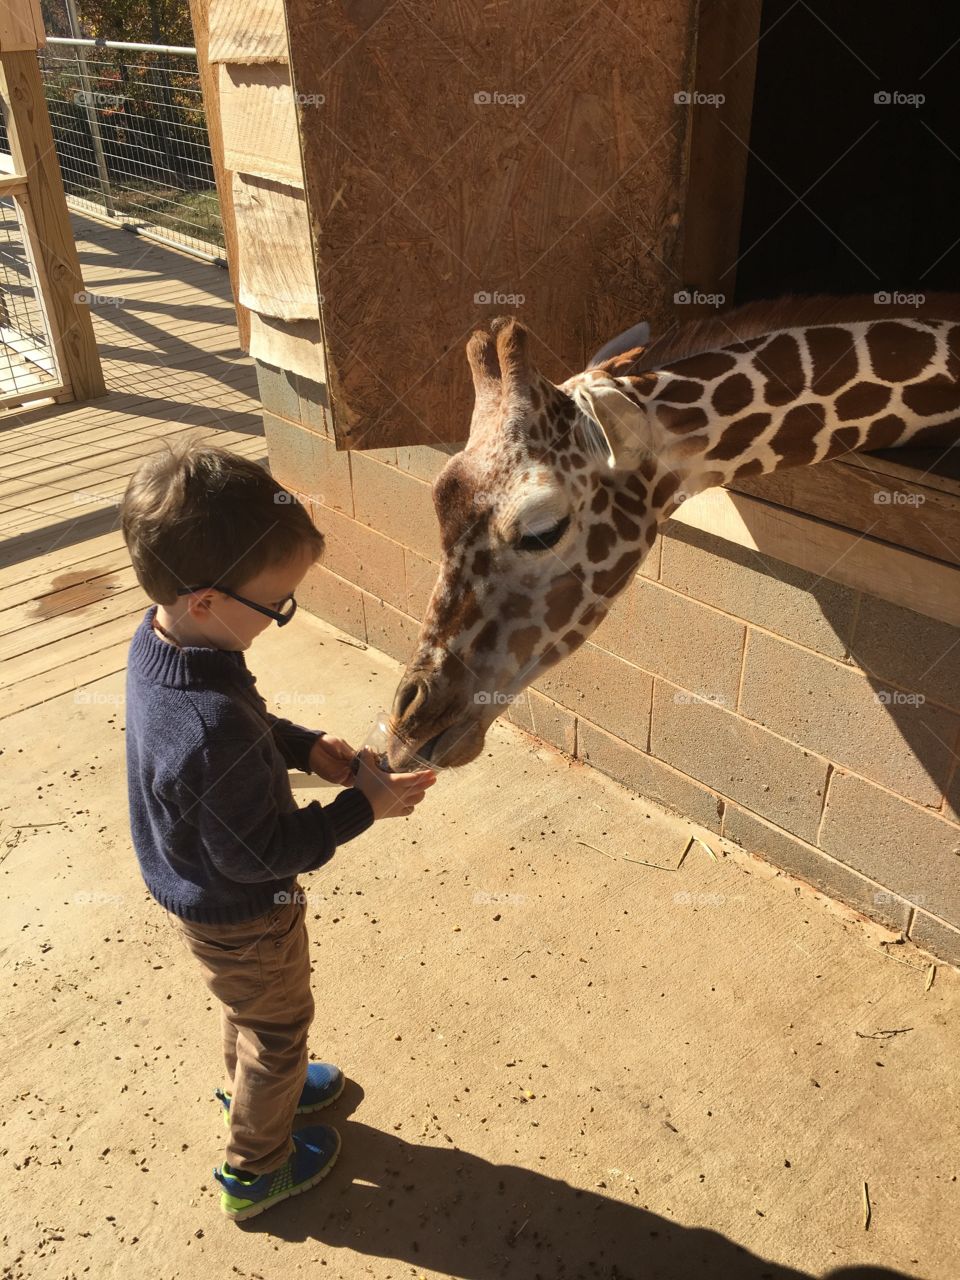 Feeding the giraffes 